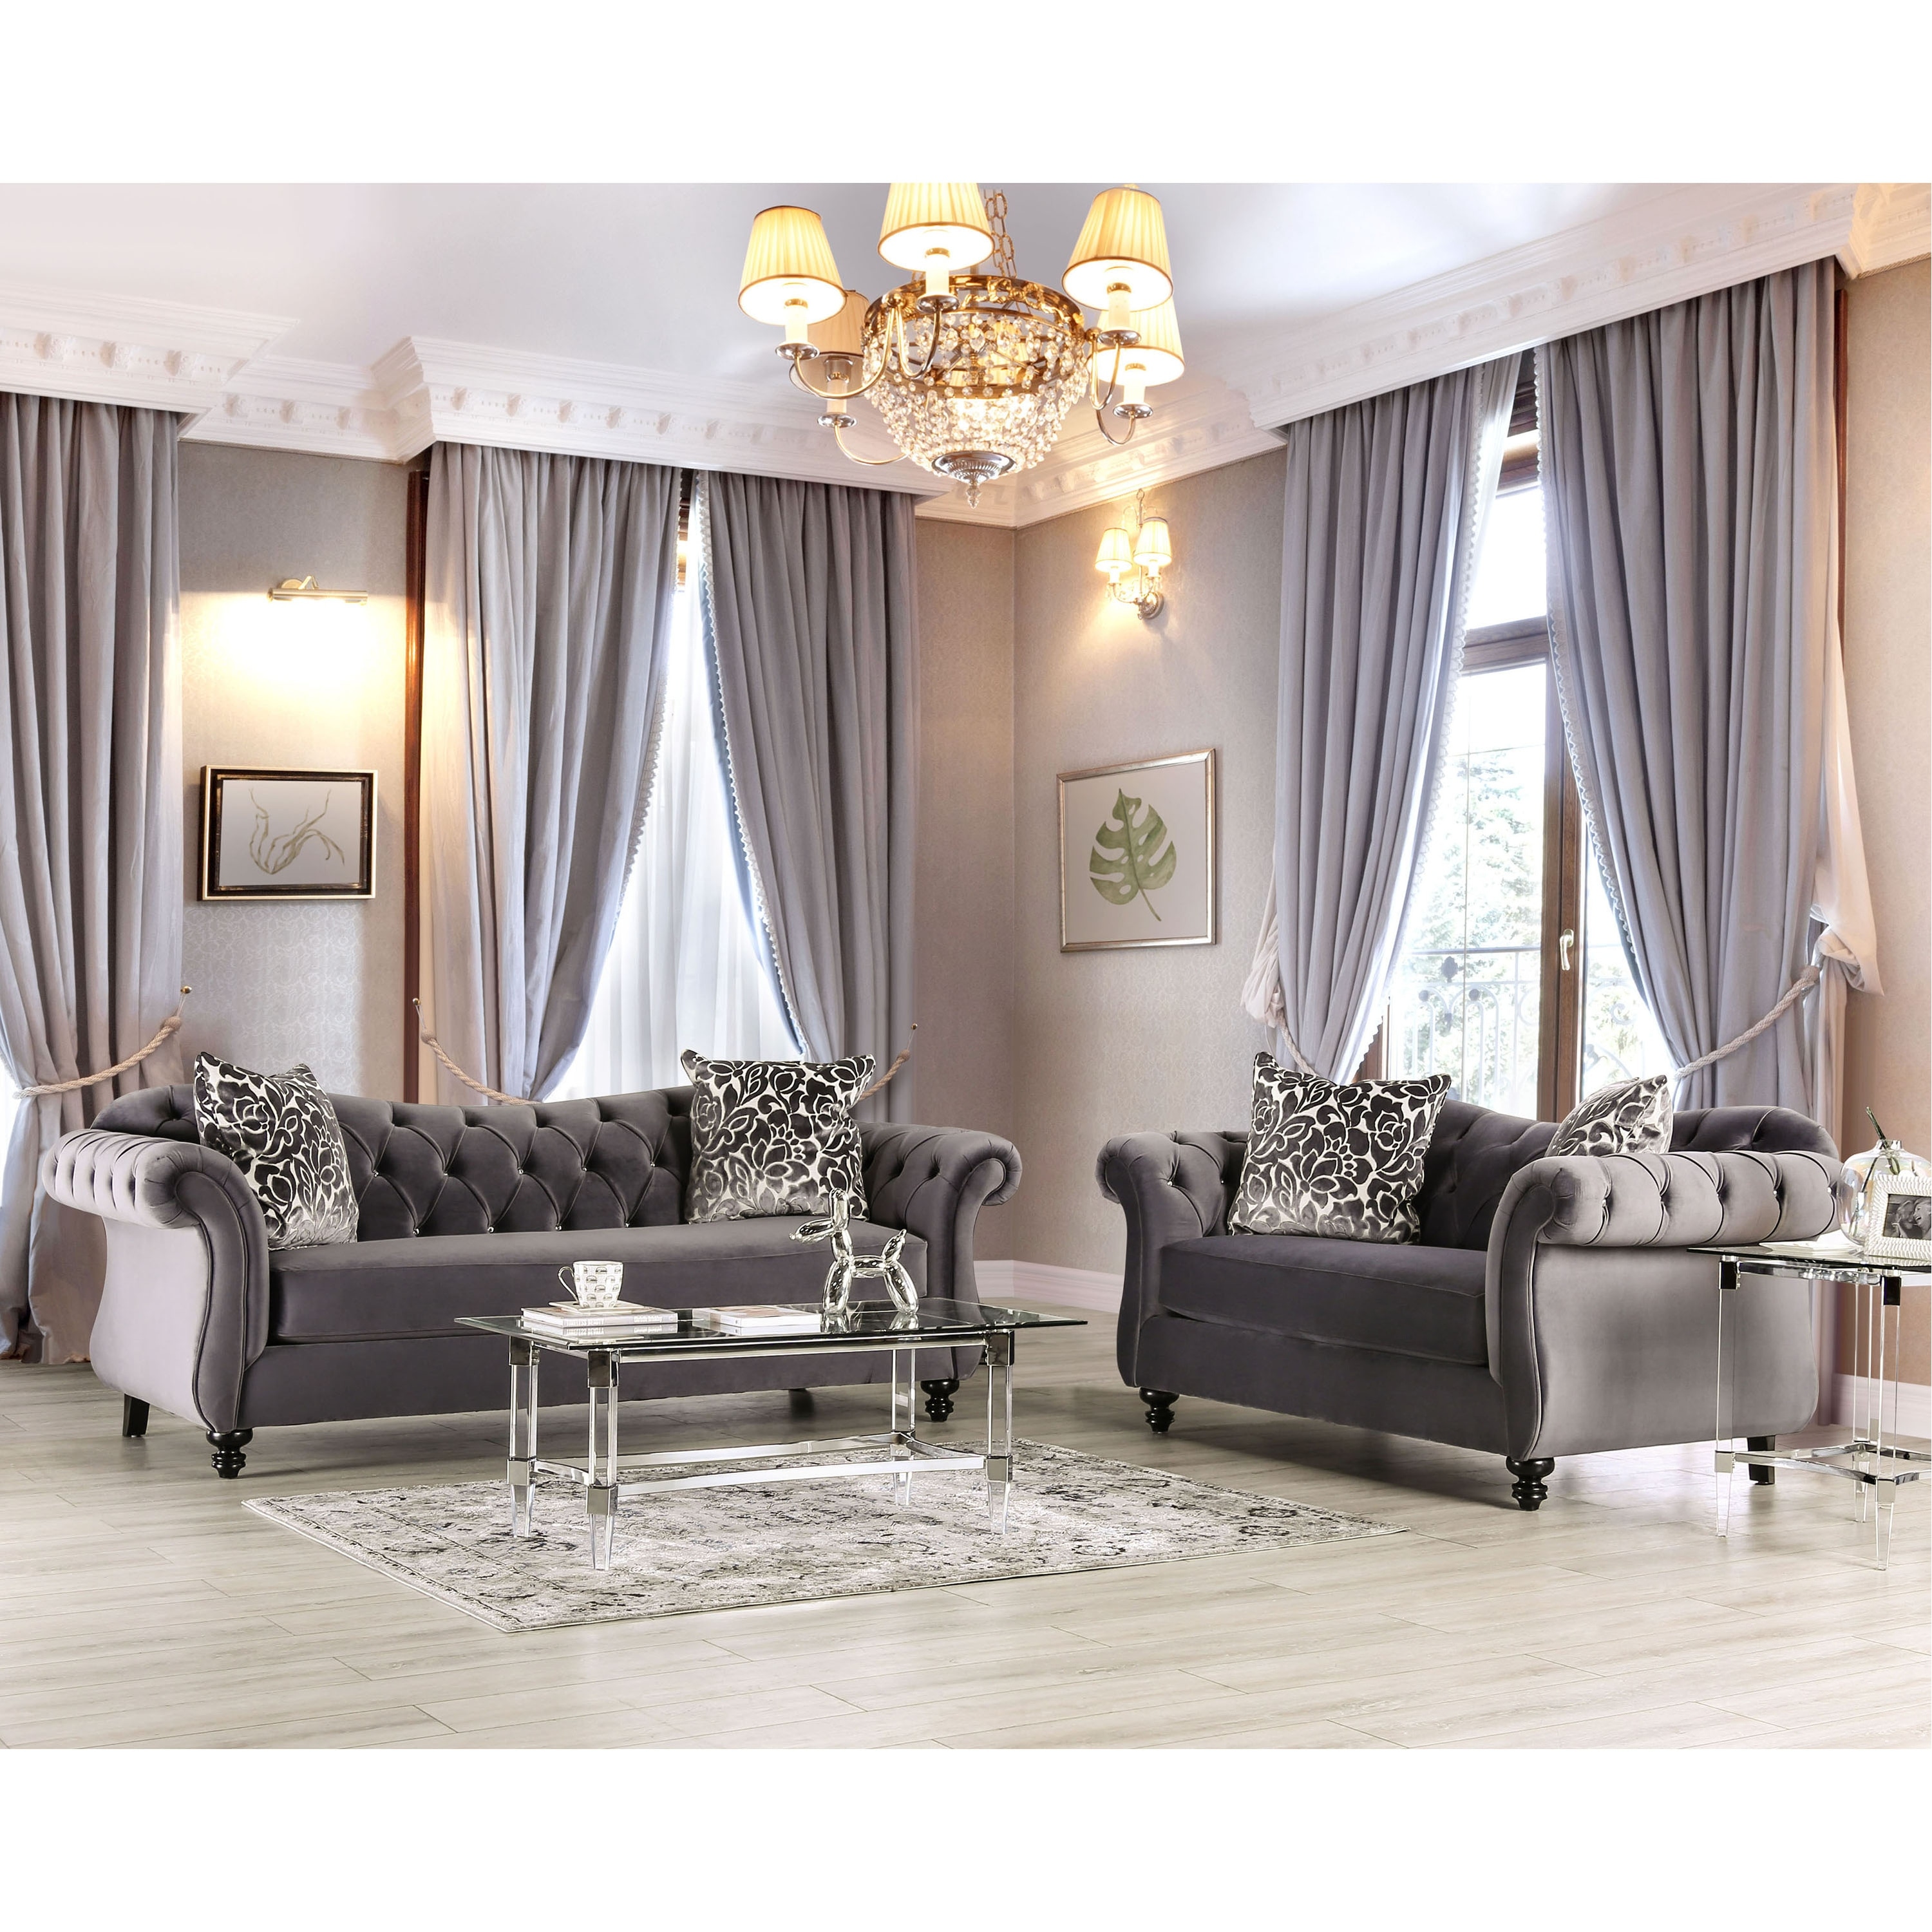 Bath Tufted Grey Set Addae Beyond Sofa - Bed America of Furniture - 35568765 2-Piece Fabric & Glam of